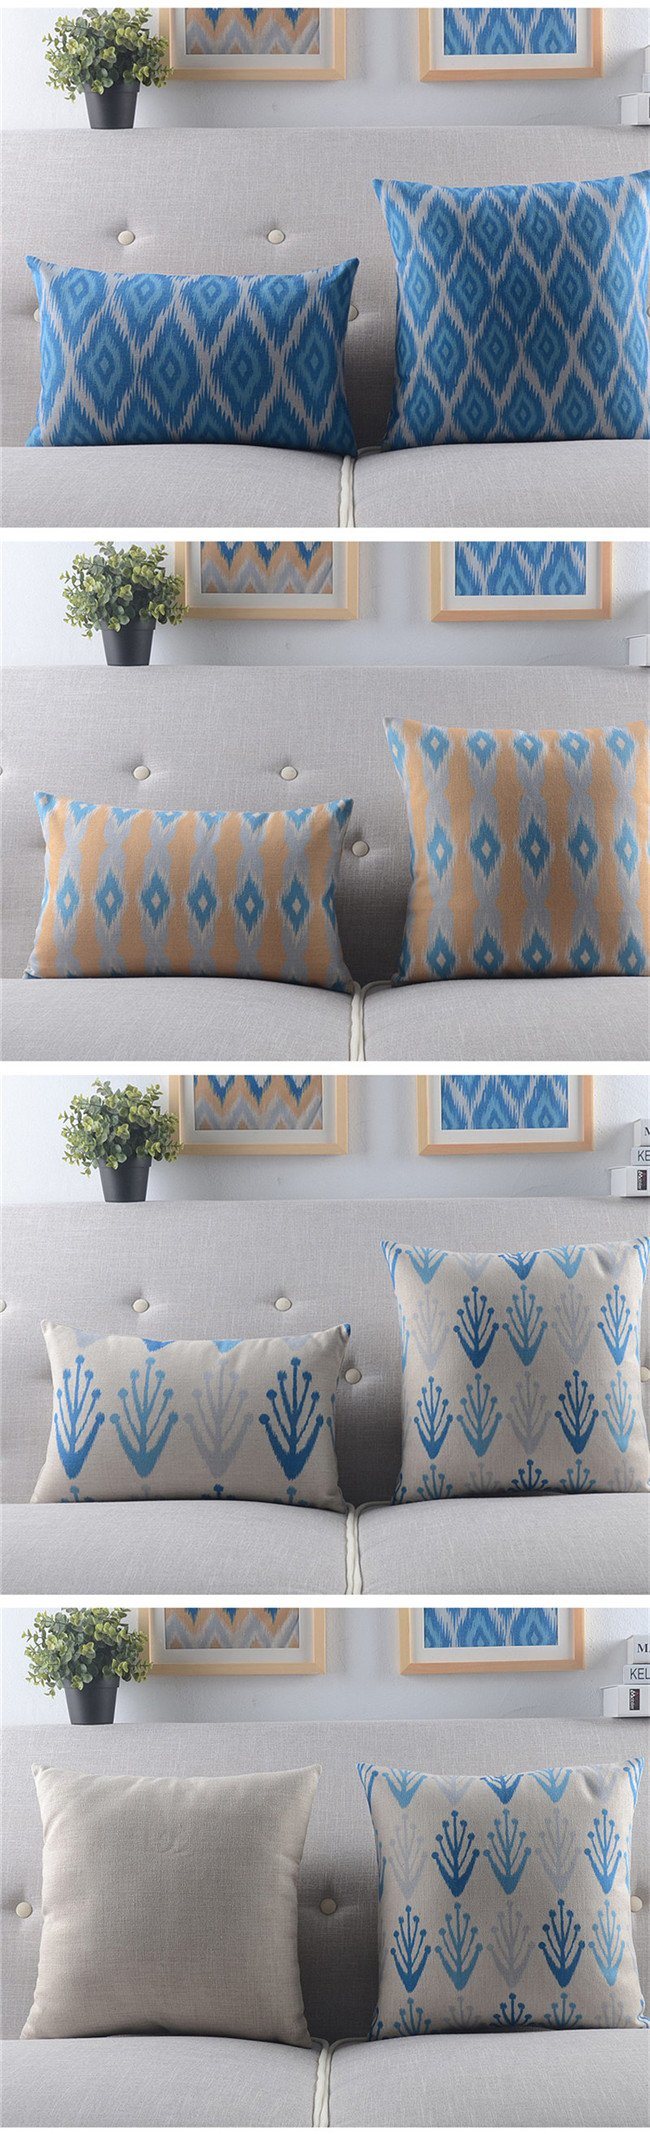 Yrf New Style Handmade Geometric Patterns Sewing Cushions Pillow